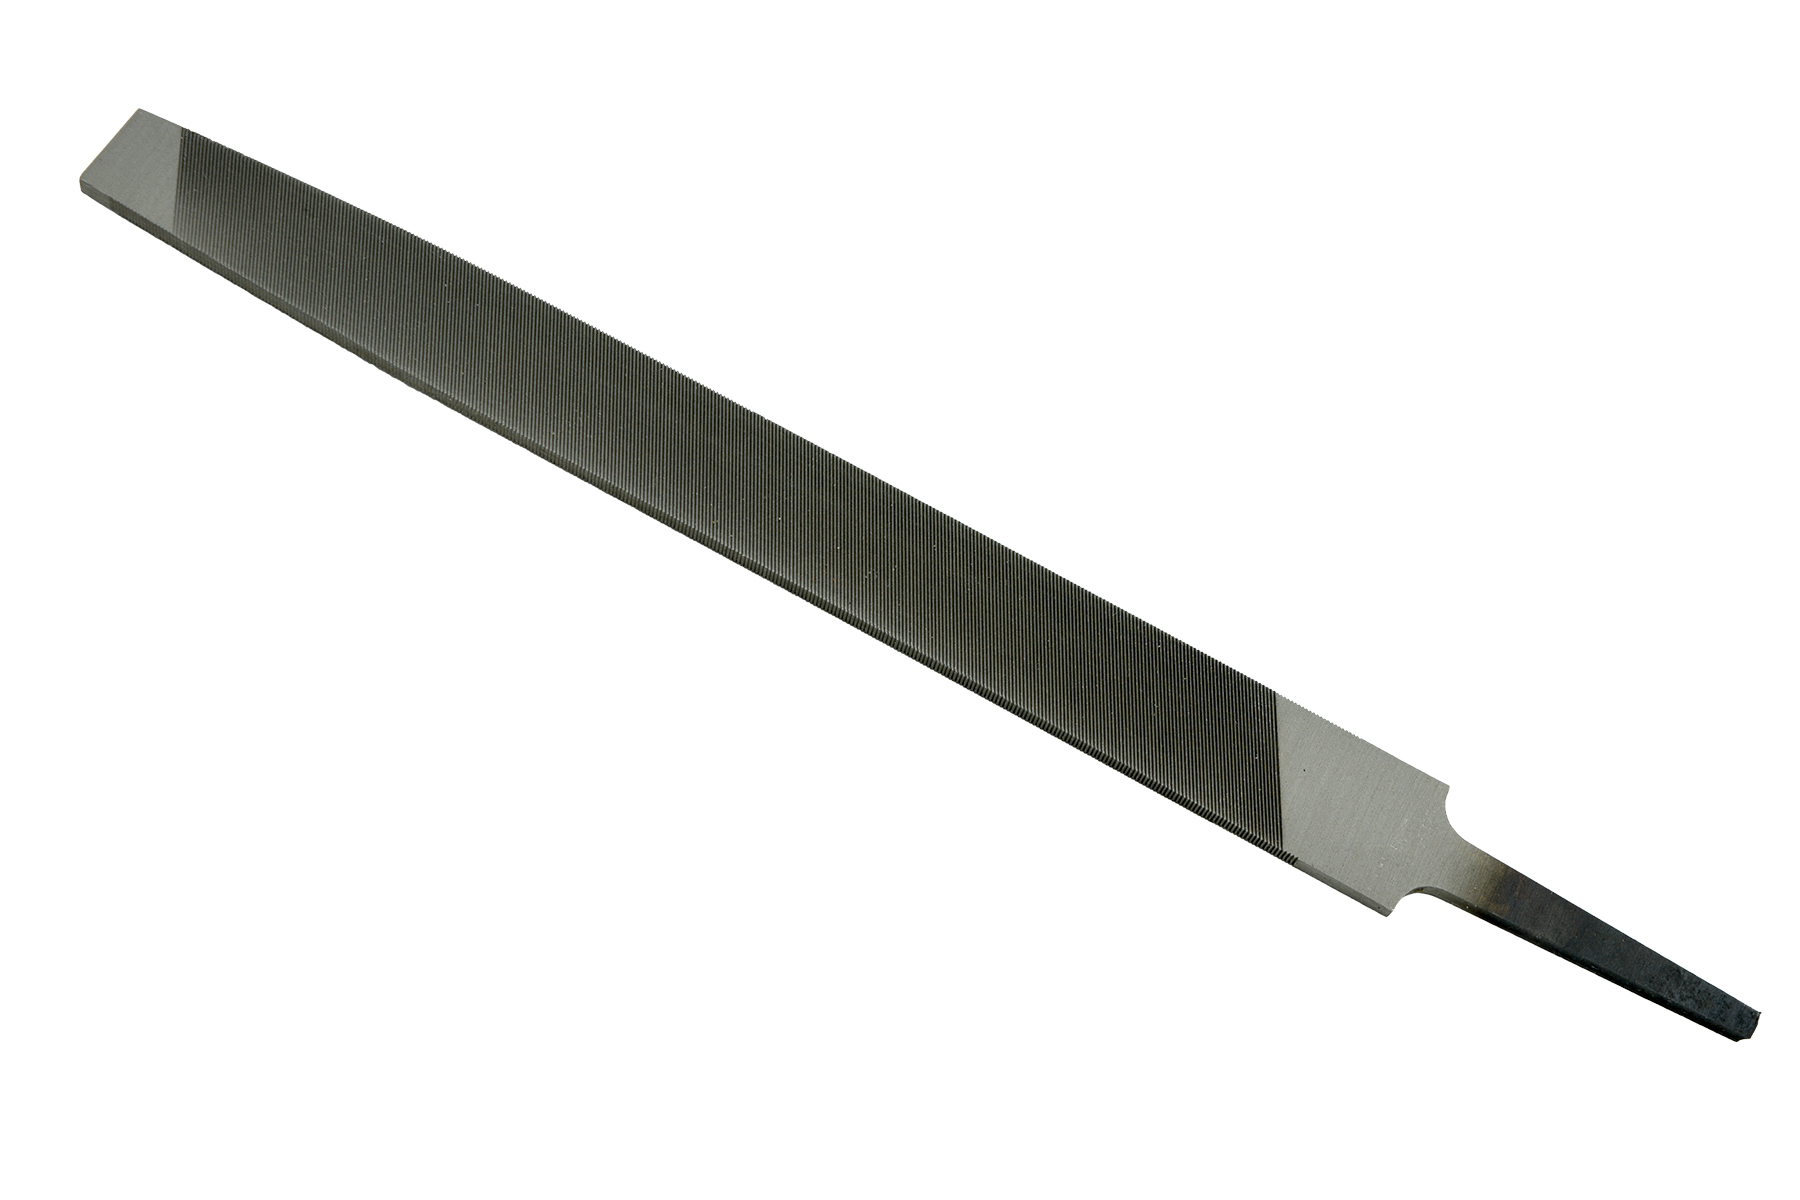 Sharpening File AGF200AA Escofina, Mill Lima Bastarda, de 8 pulgadas (200 mm), para afilar cuchillos y tijeras de podar